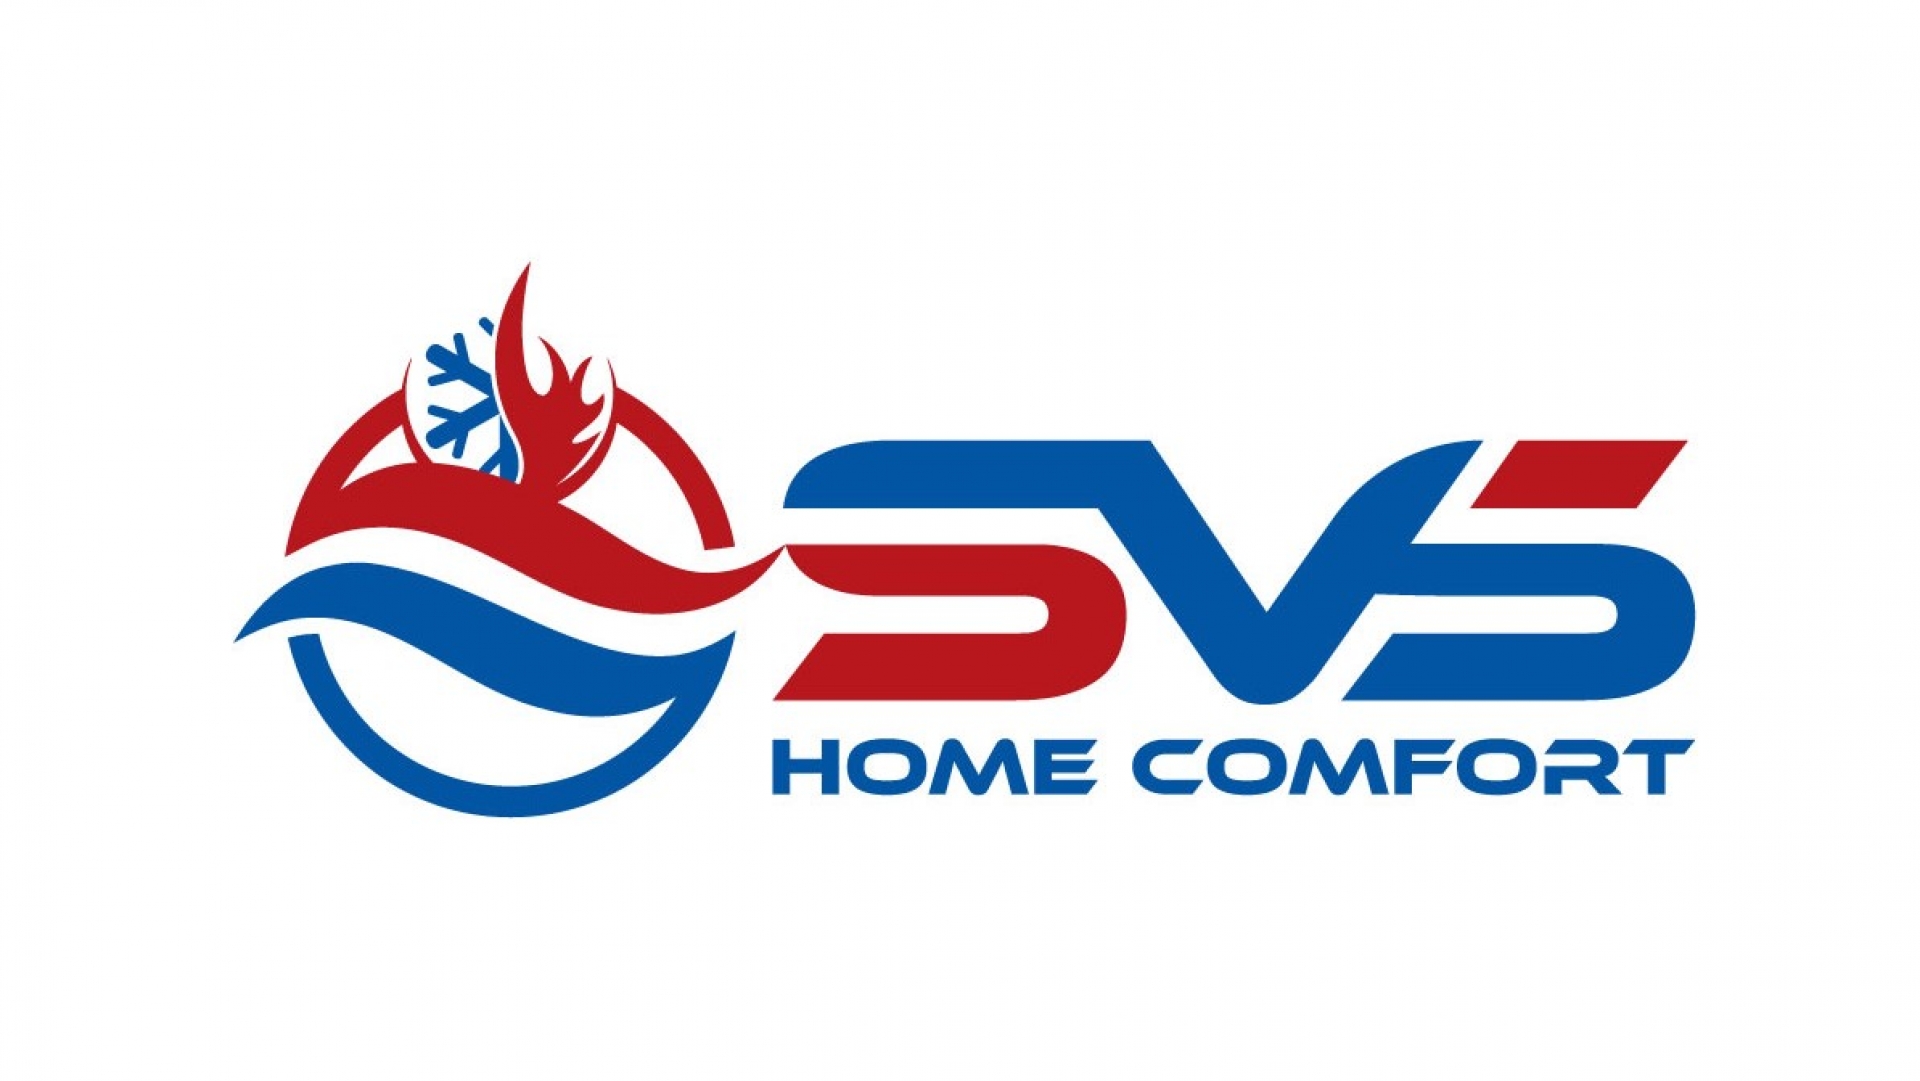 SVS Home Comfort logo